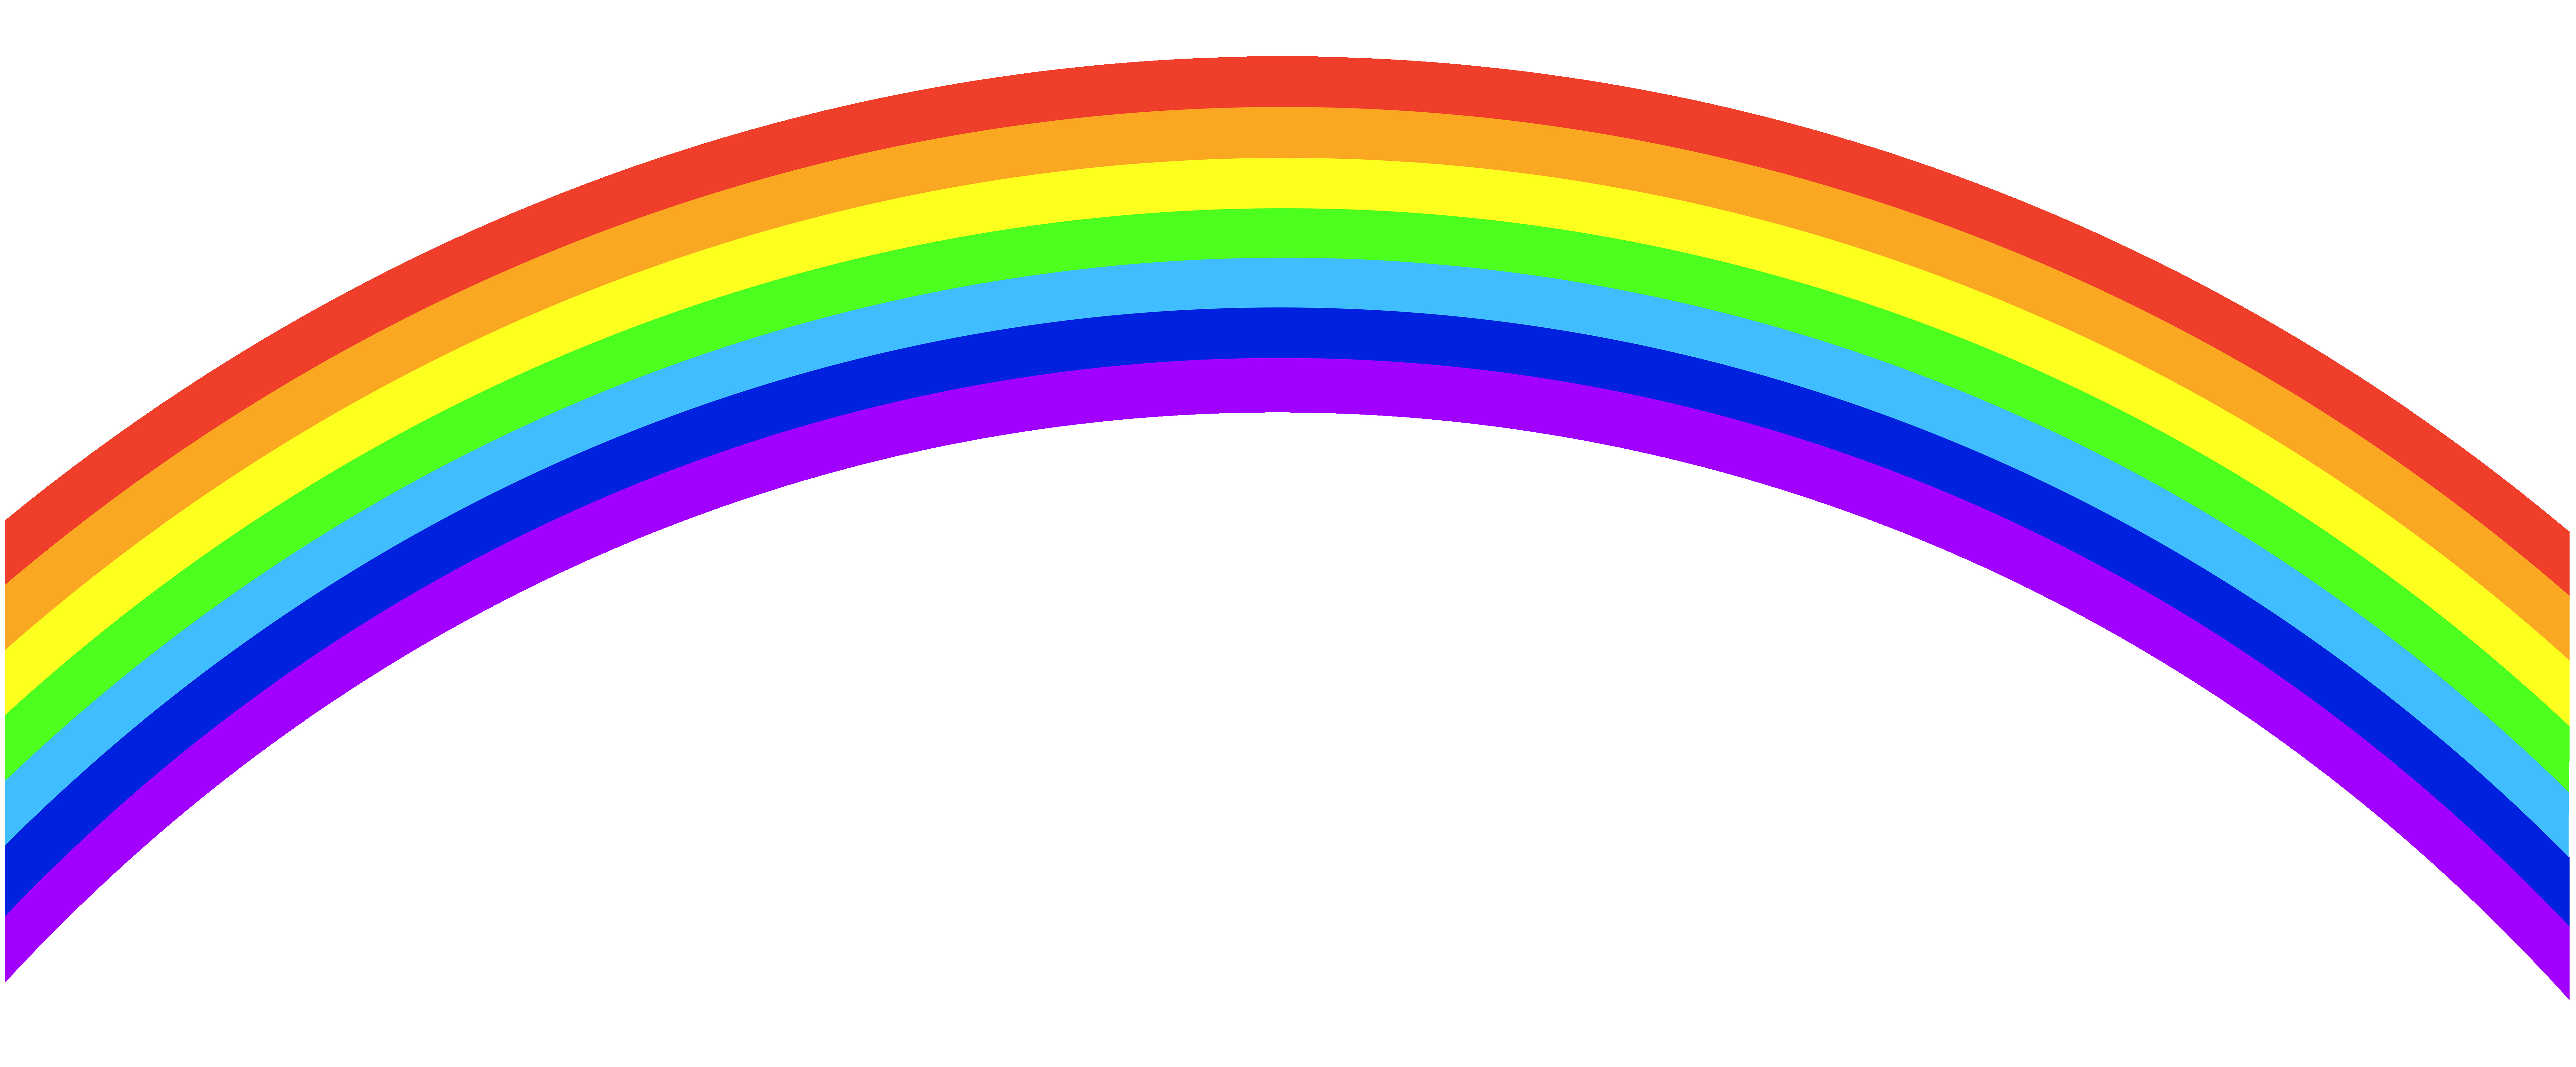 Pin By Clipart On Rainbow Bright Rainbow Brite 80s Cartoons Rainbow